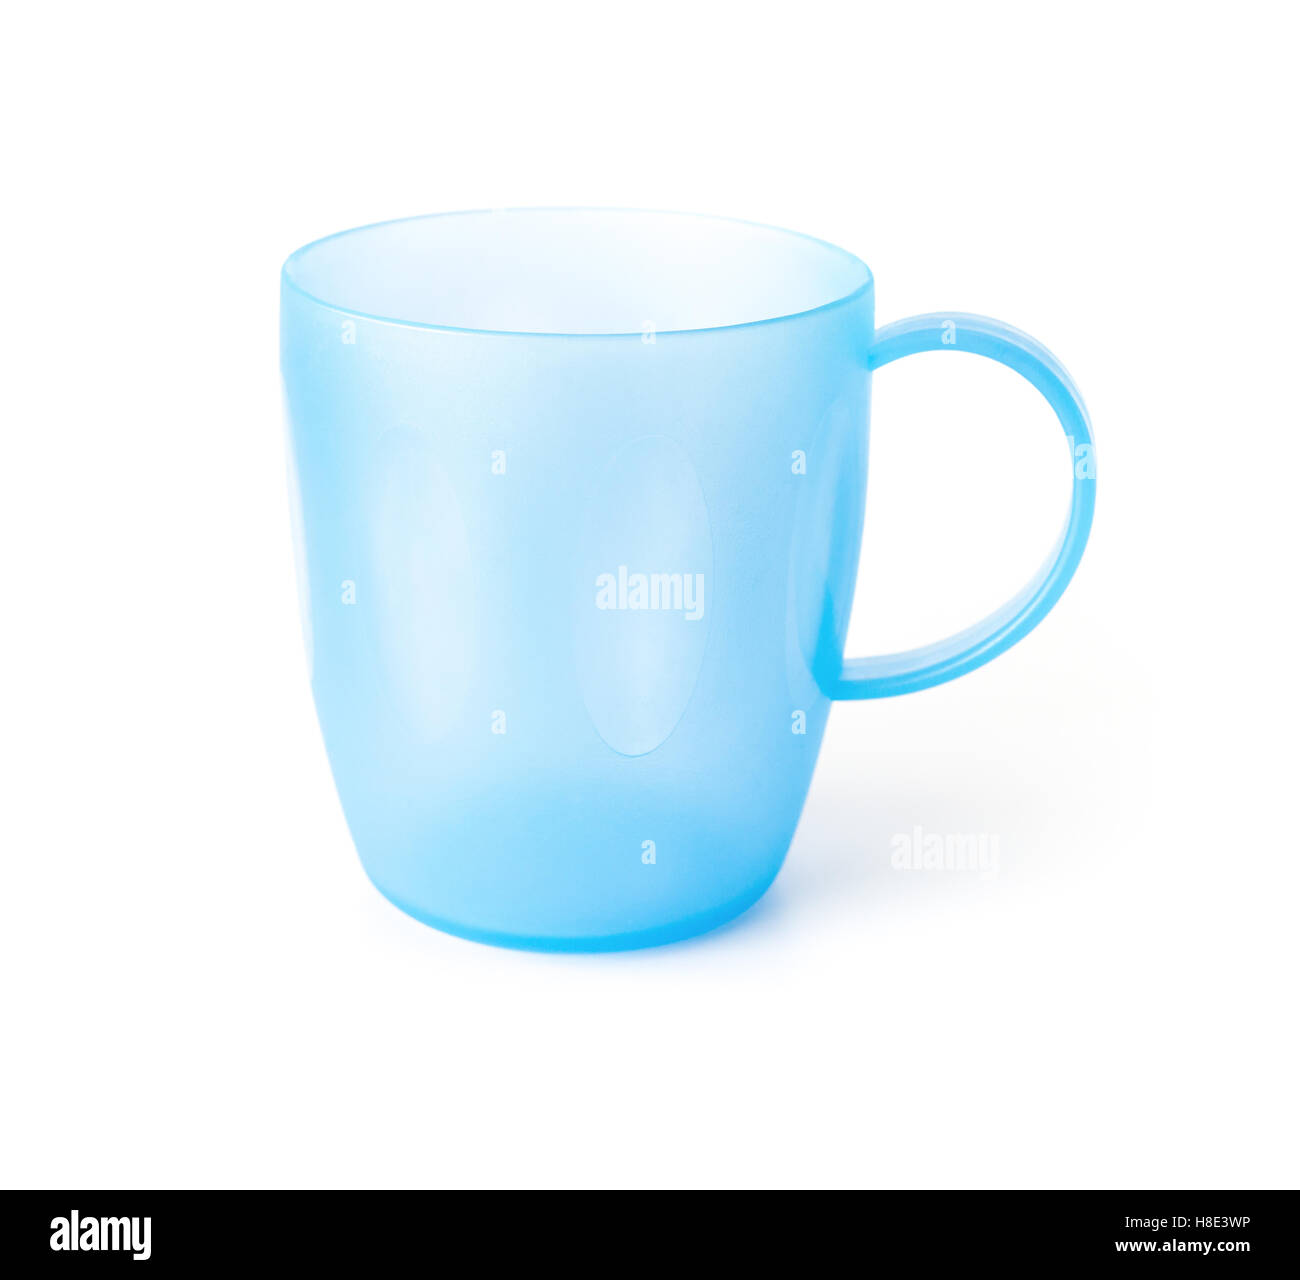 https://c8.alamy.com/comp/H8E3WP/blue-plastic-cup-on-a-white-background-H8E3WP.jpg